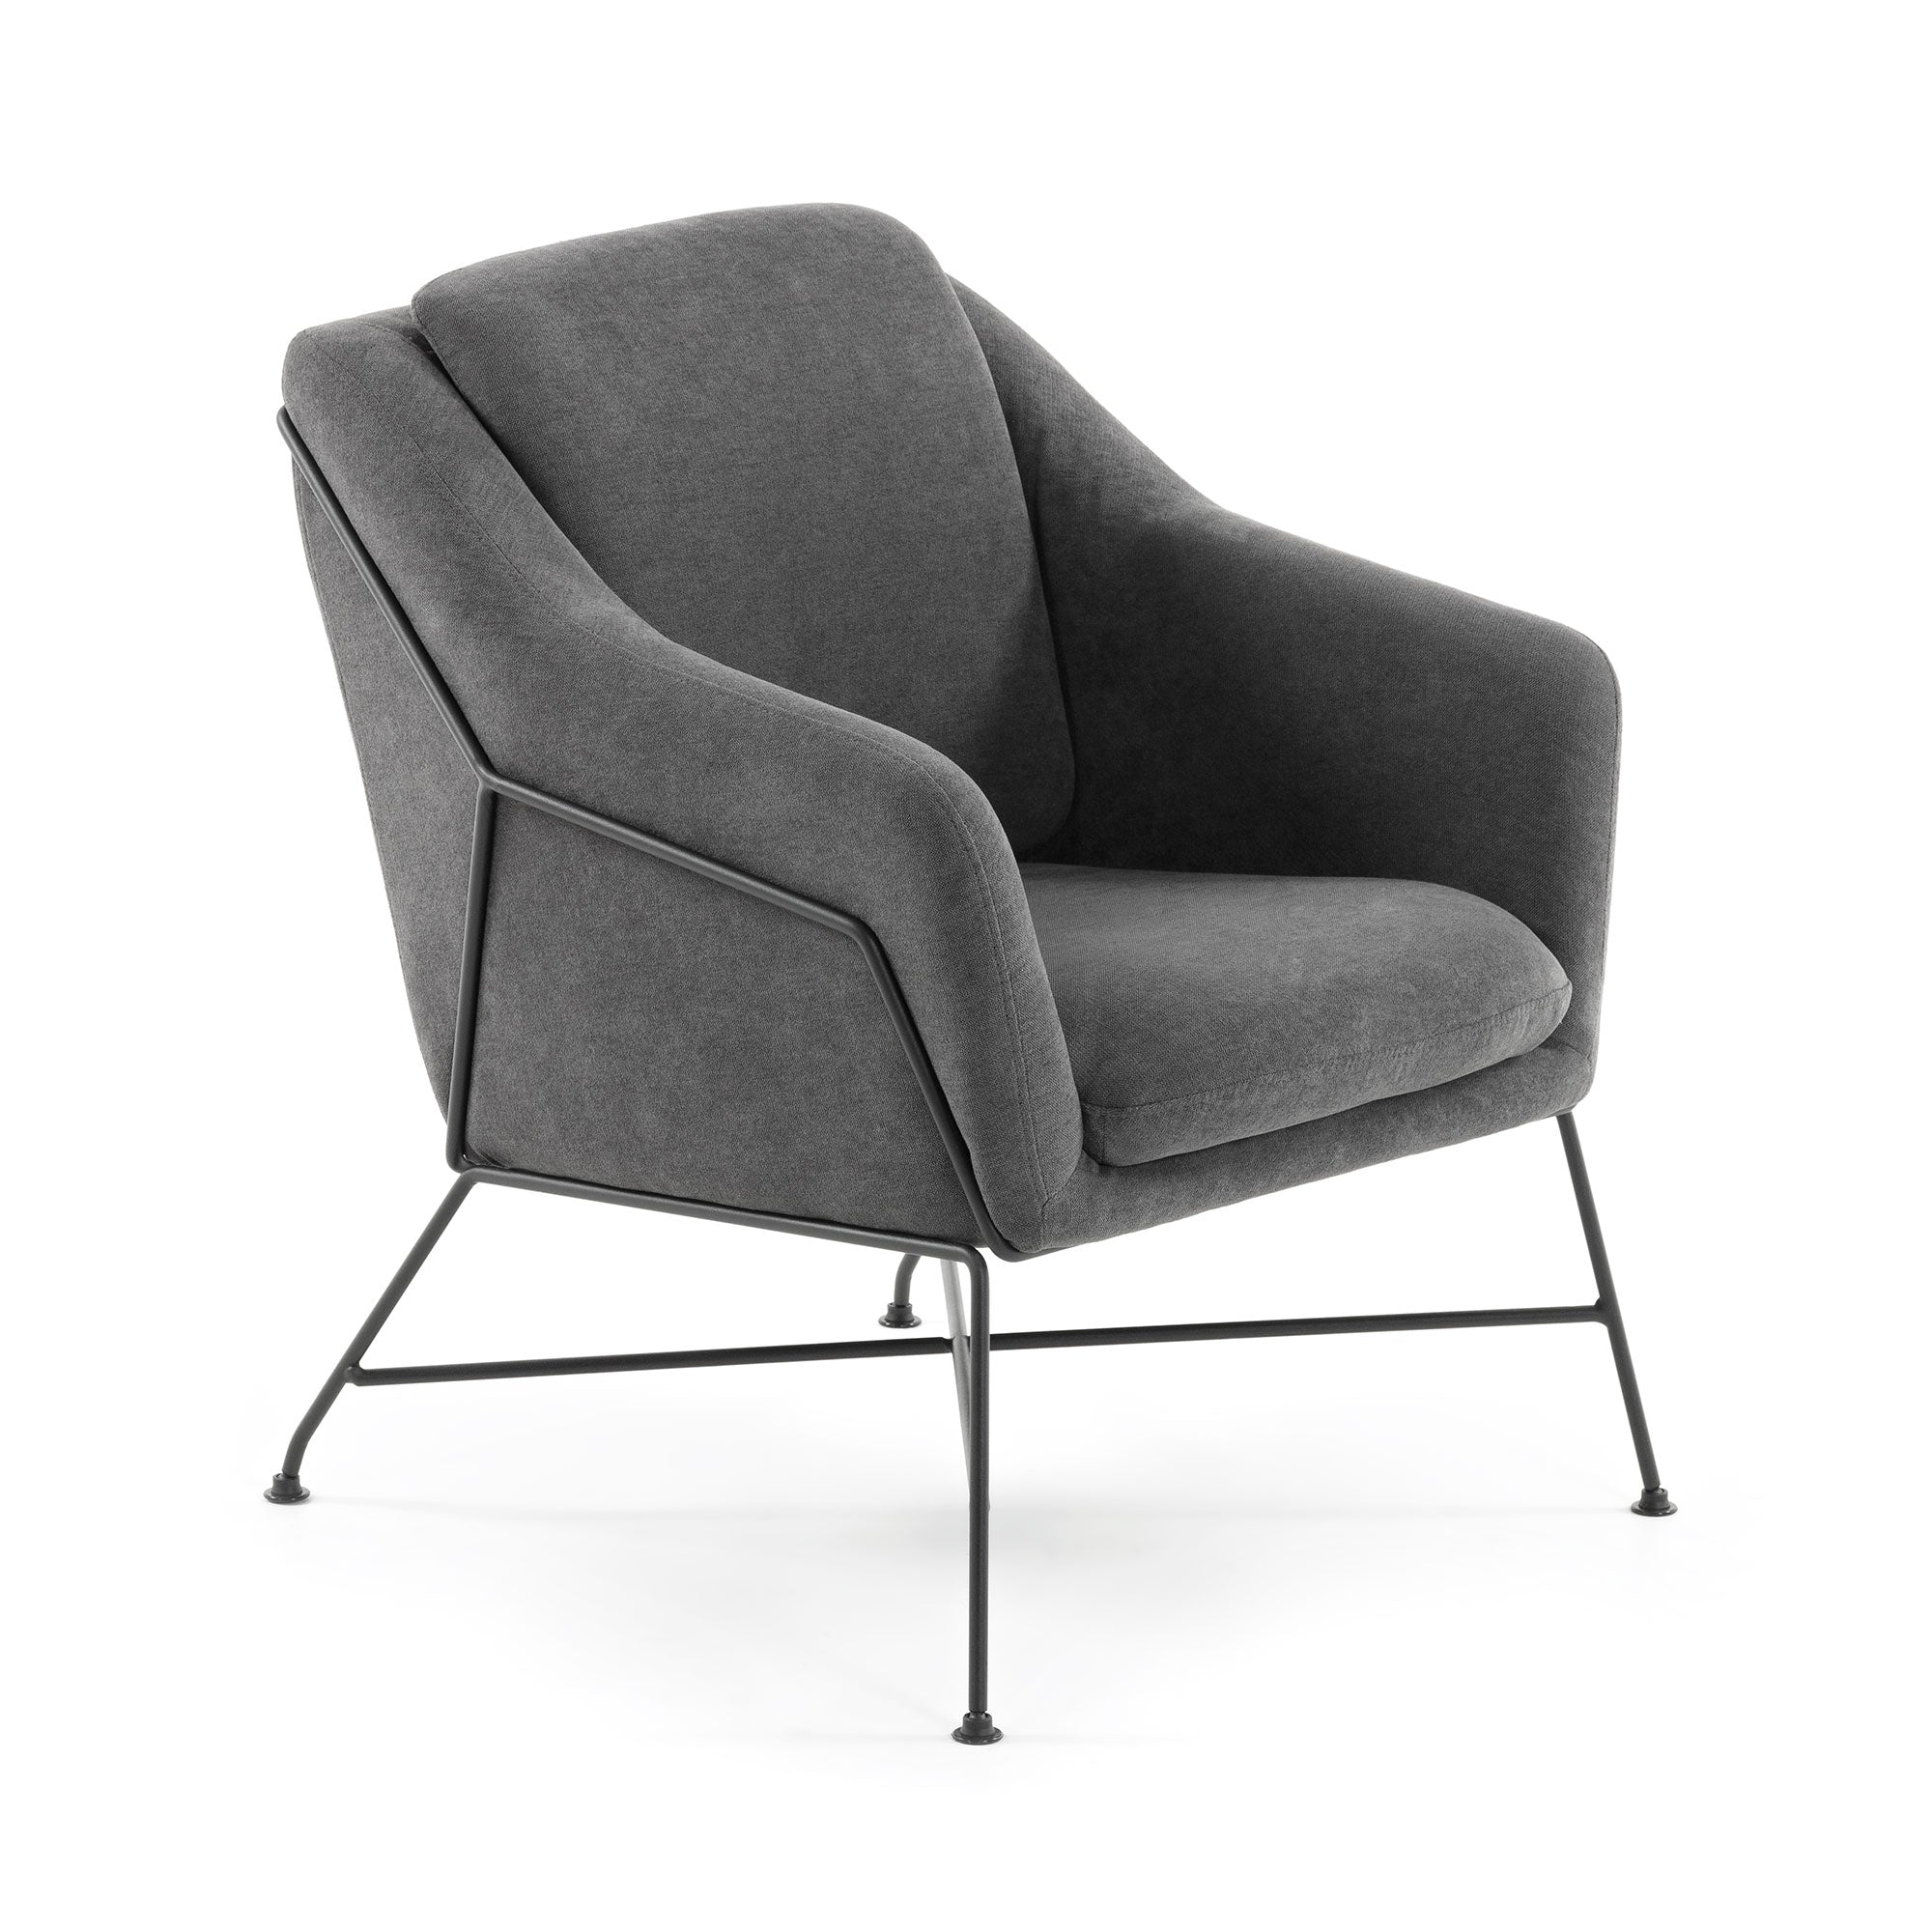 Brida armchair in dark grey with steel structure in black finish.